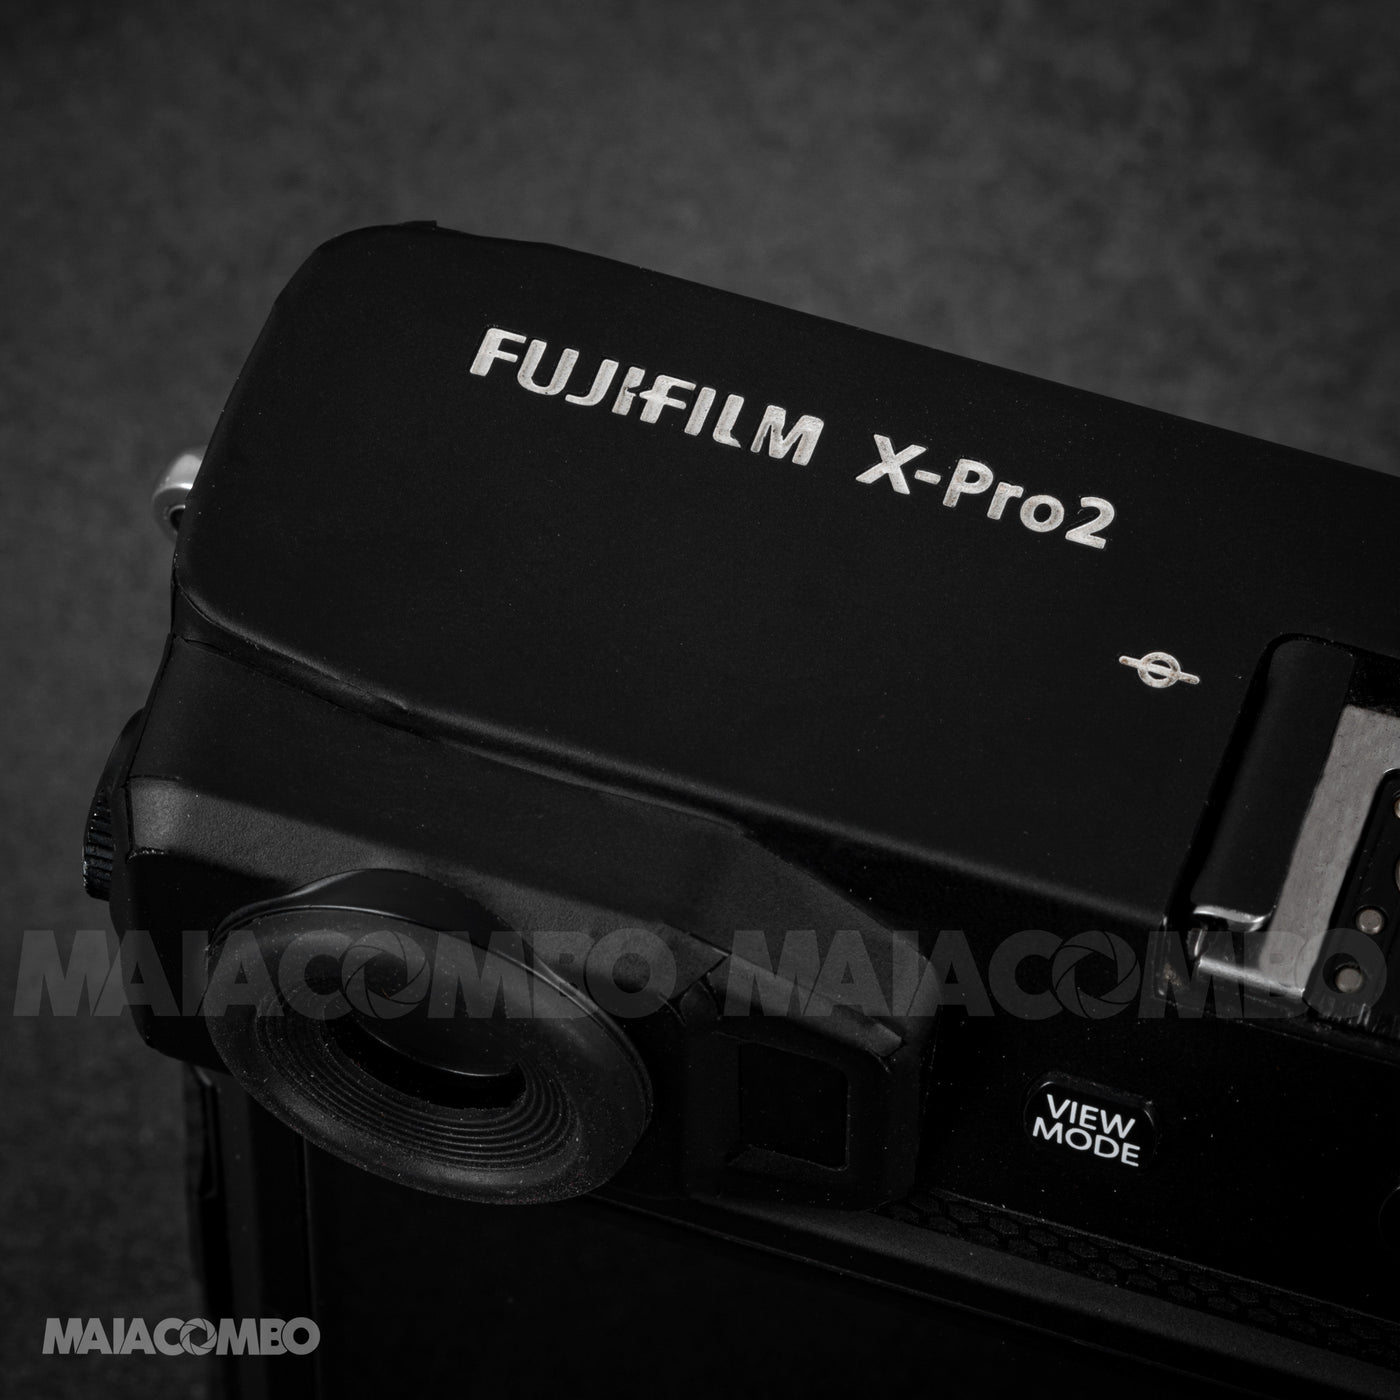 FUJIFILM X-Pro2 Camera Skin/ Wrap